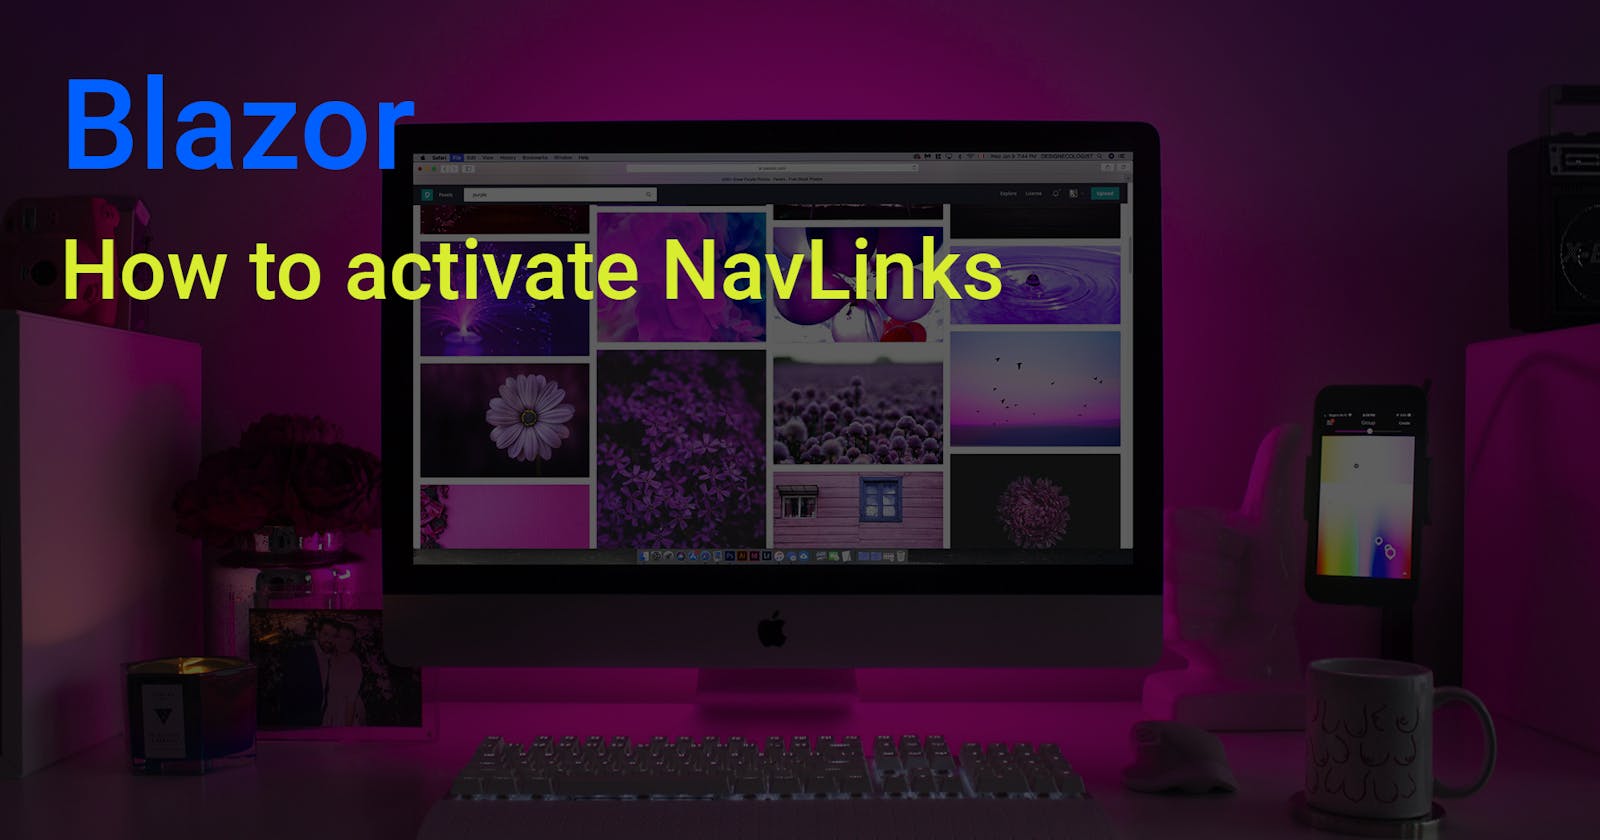 Blazor: How to actually customize NavLink's ActiveClass